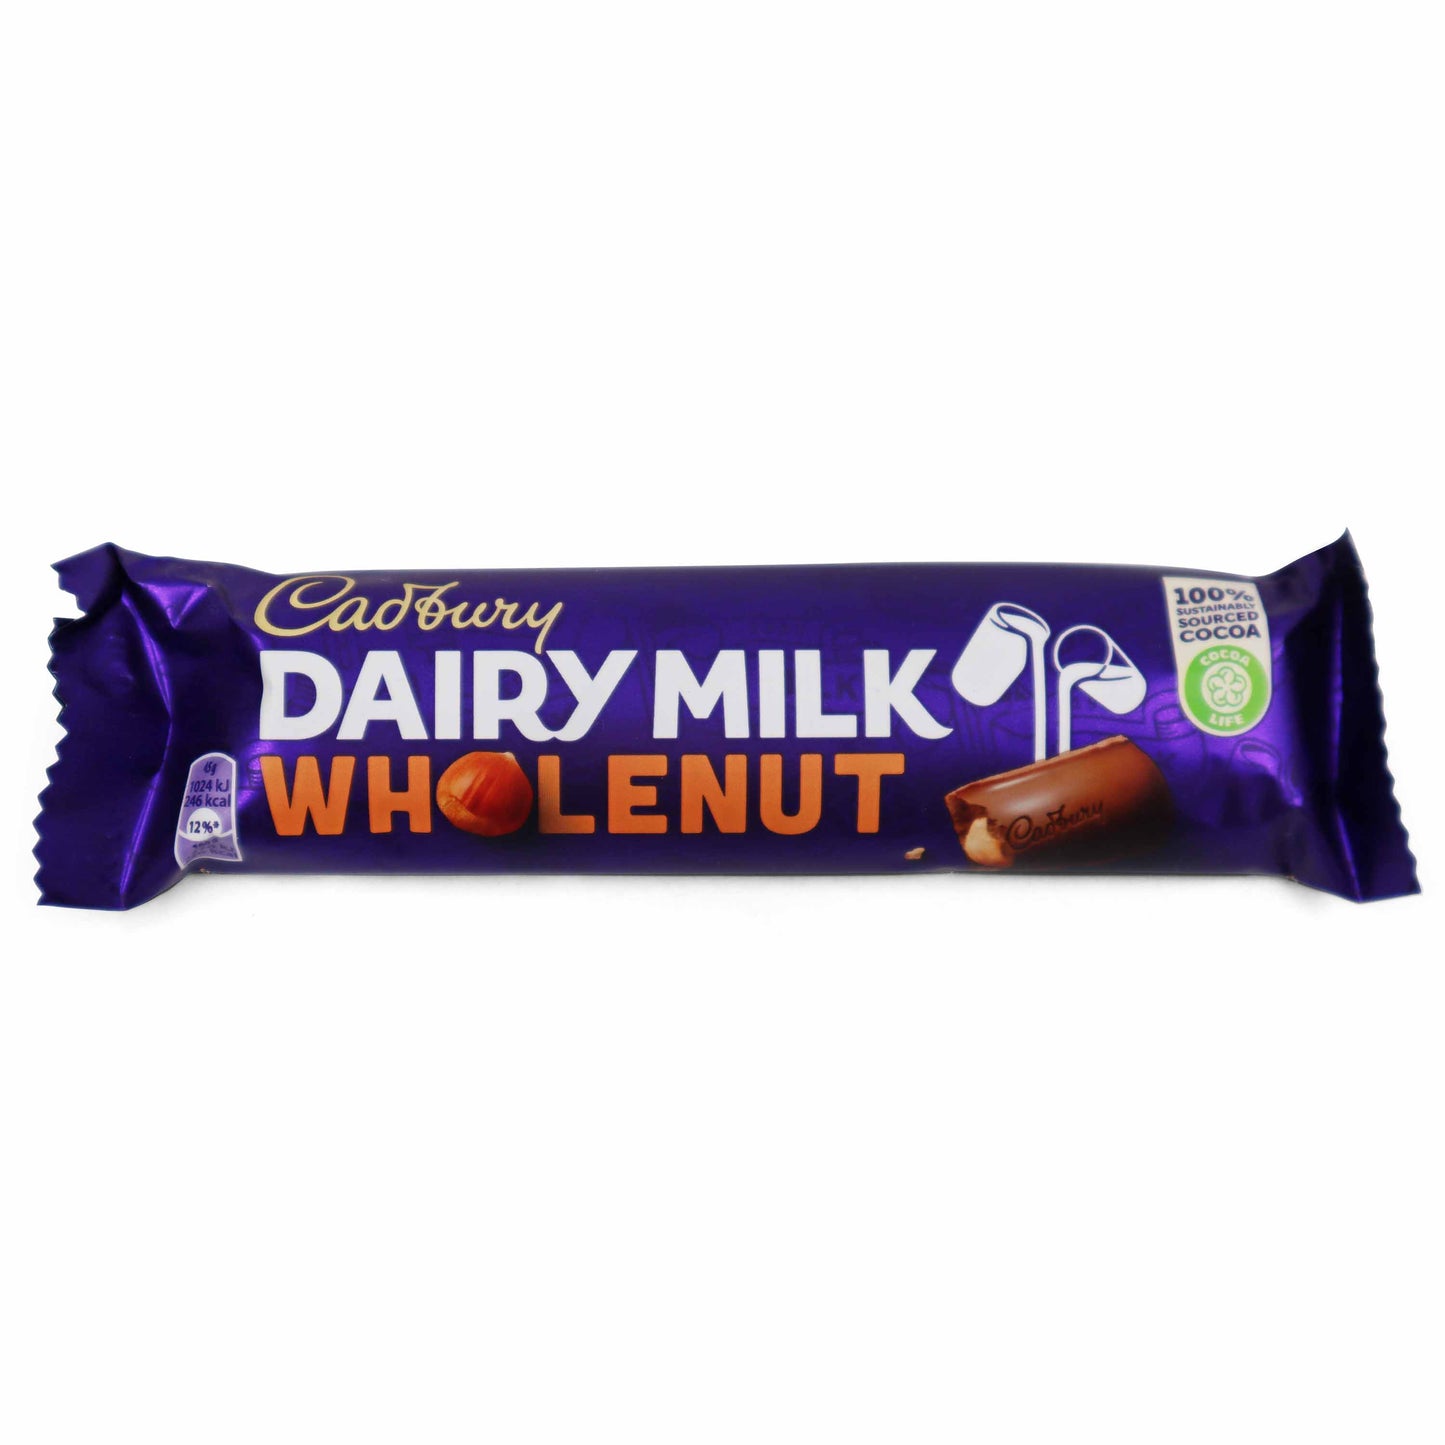 Cadbury Dairy Milk Whole Nut Chocolate Bar Single 45g - London Souvenirs